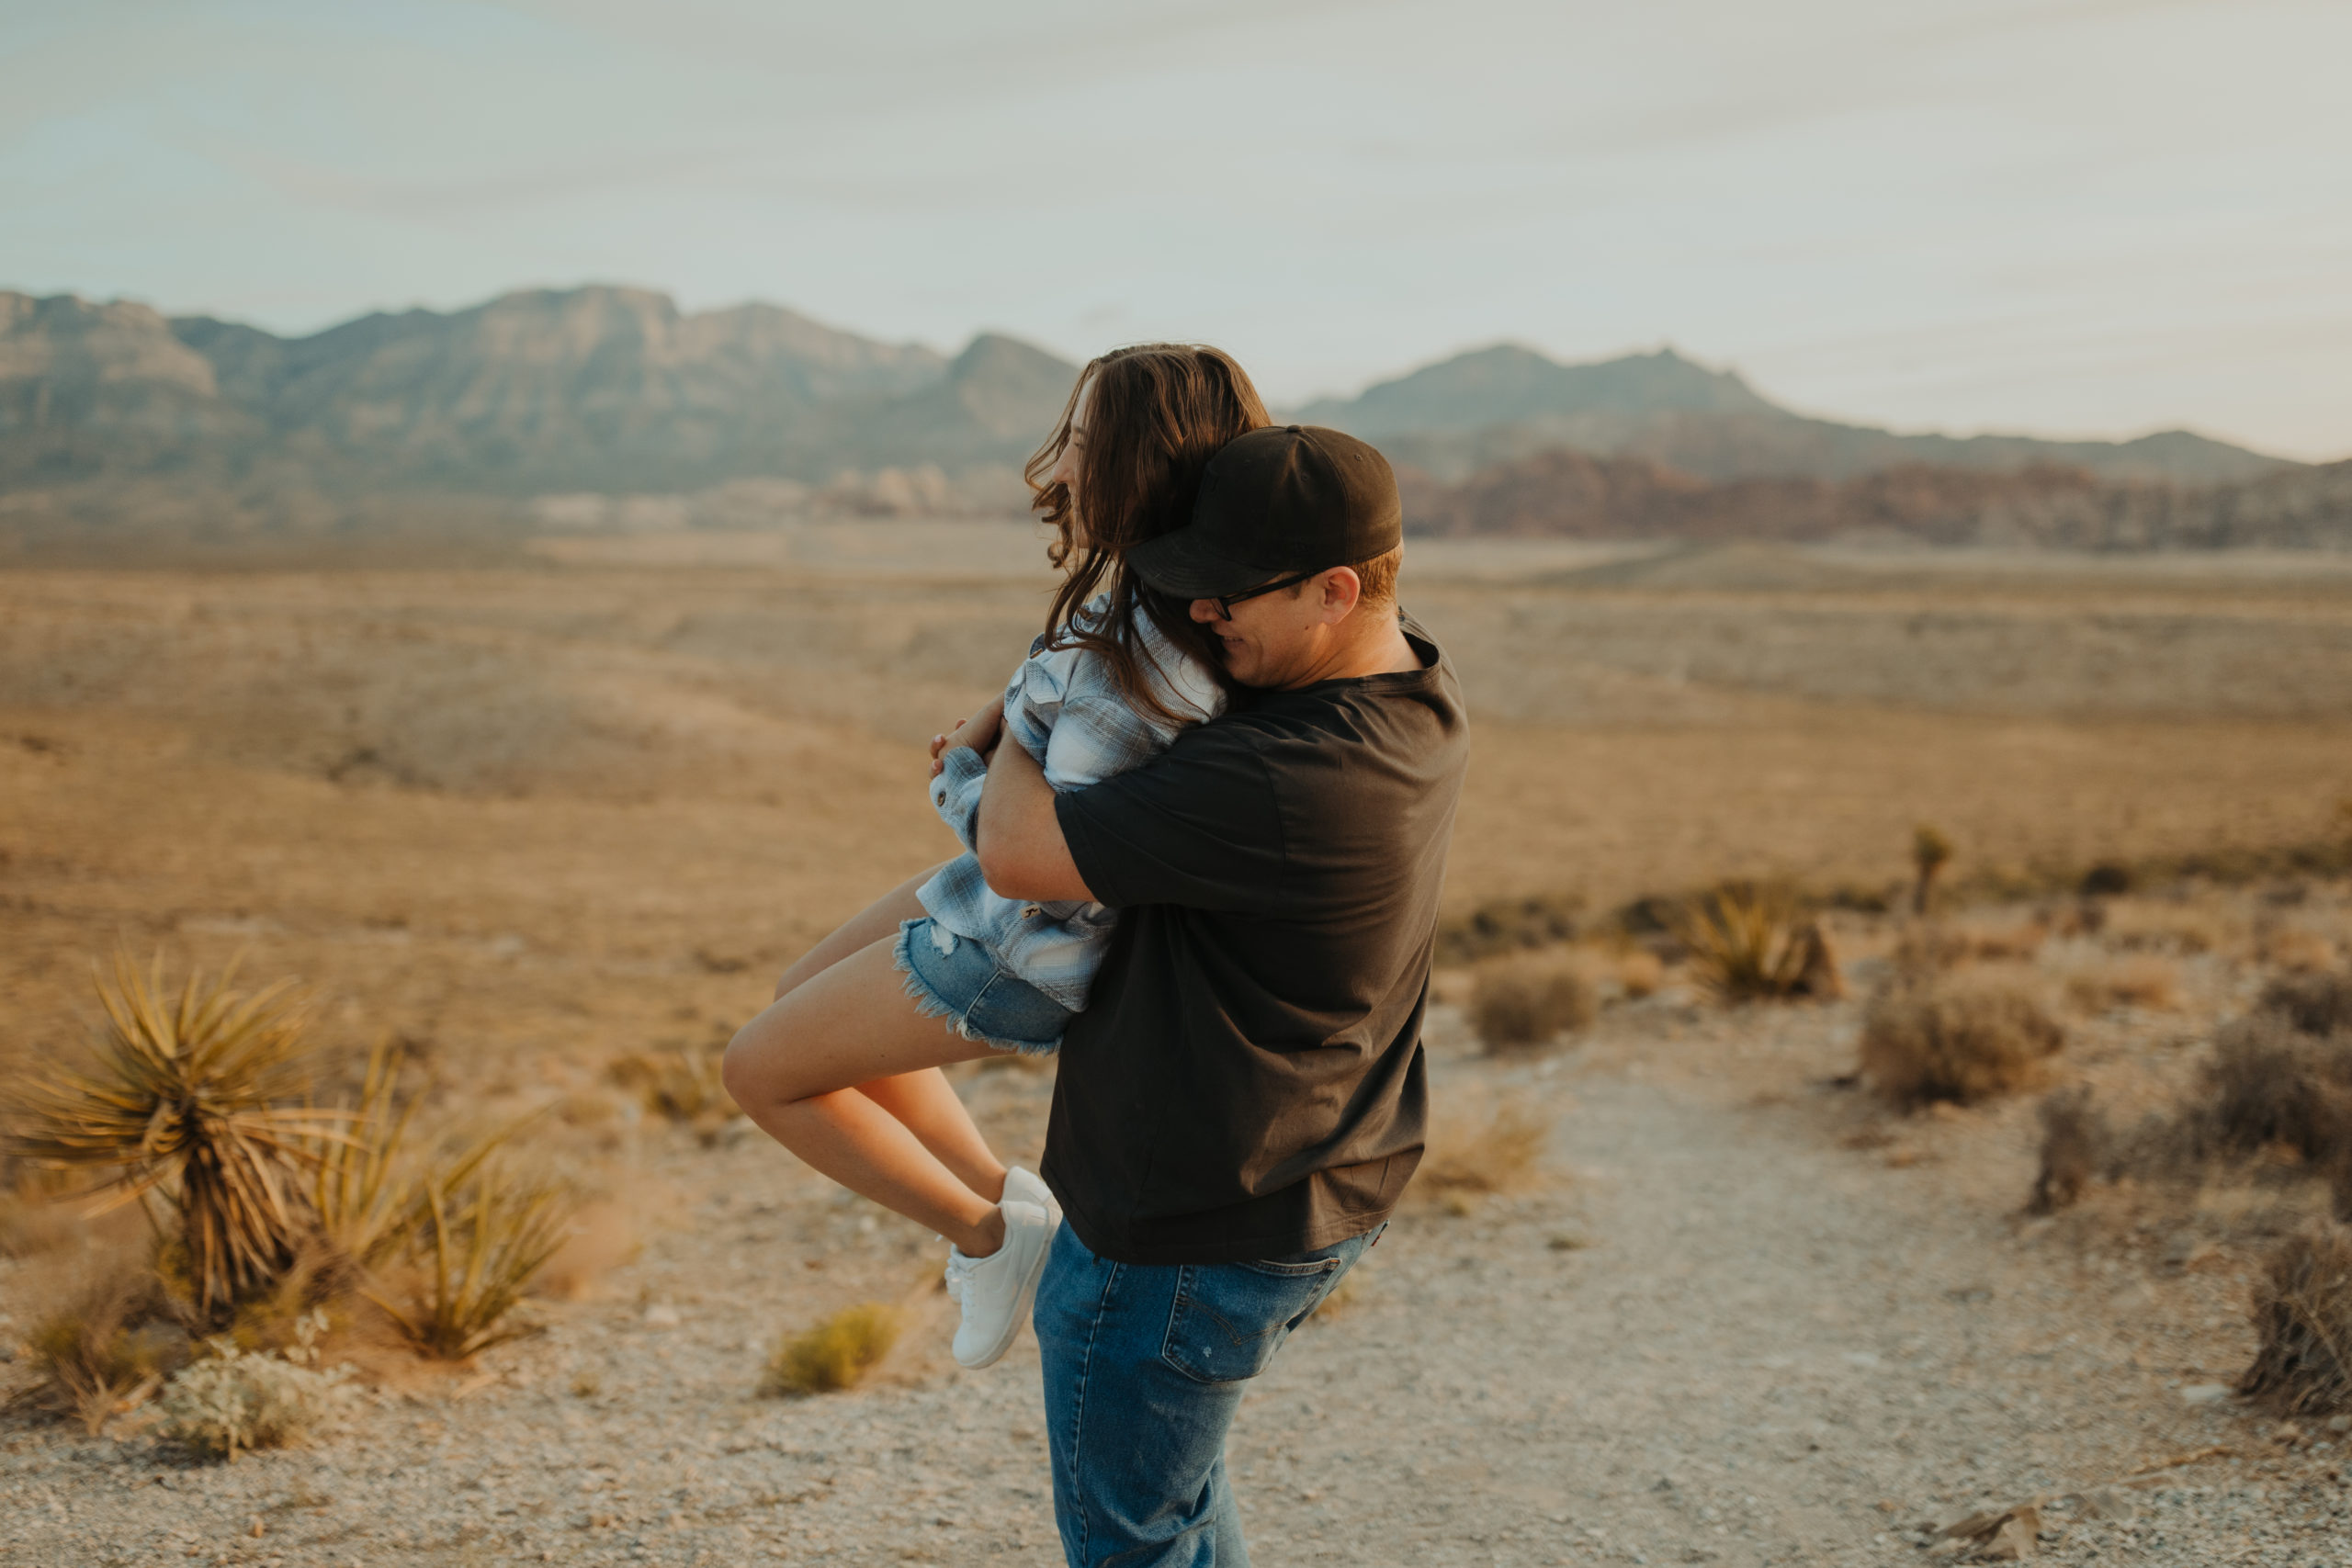 boyfriend lifting and spinning his girlfriend around in the desert